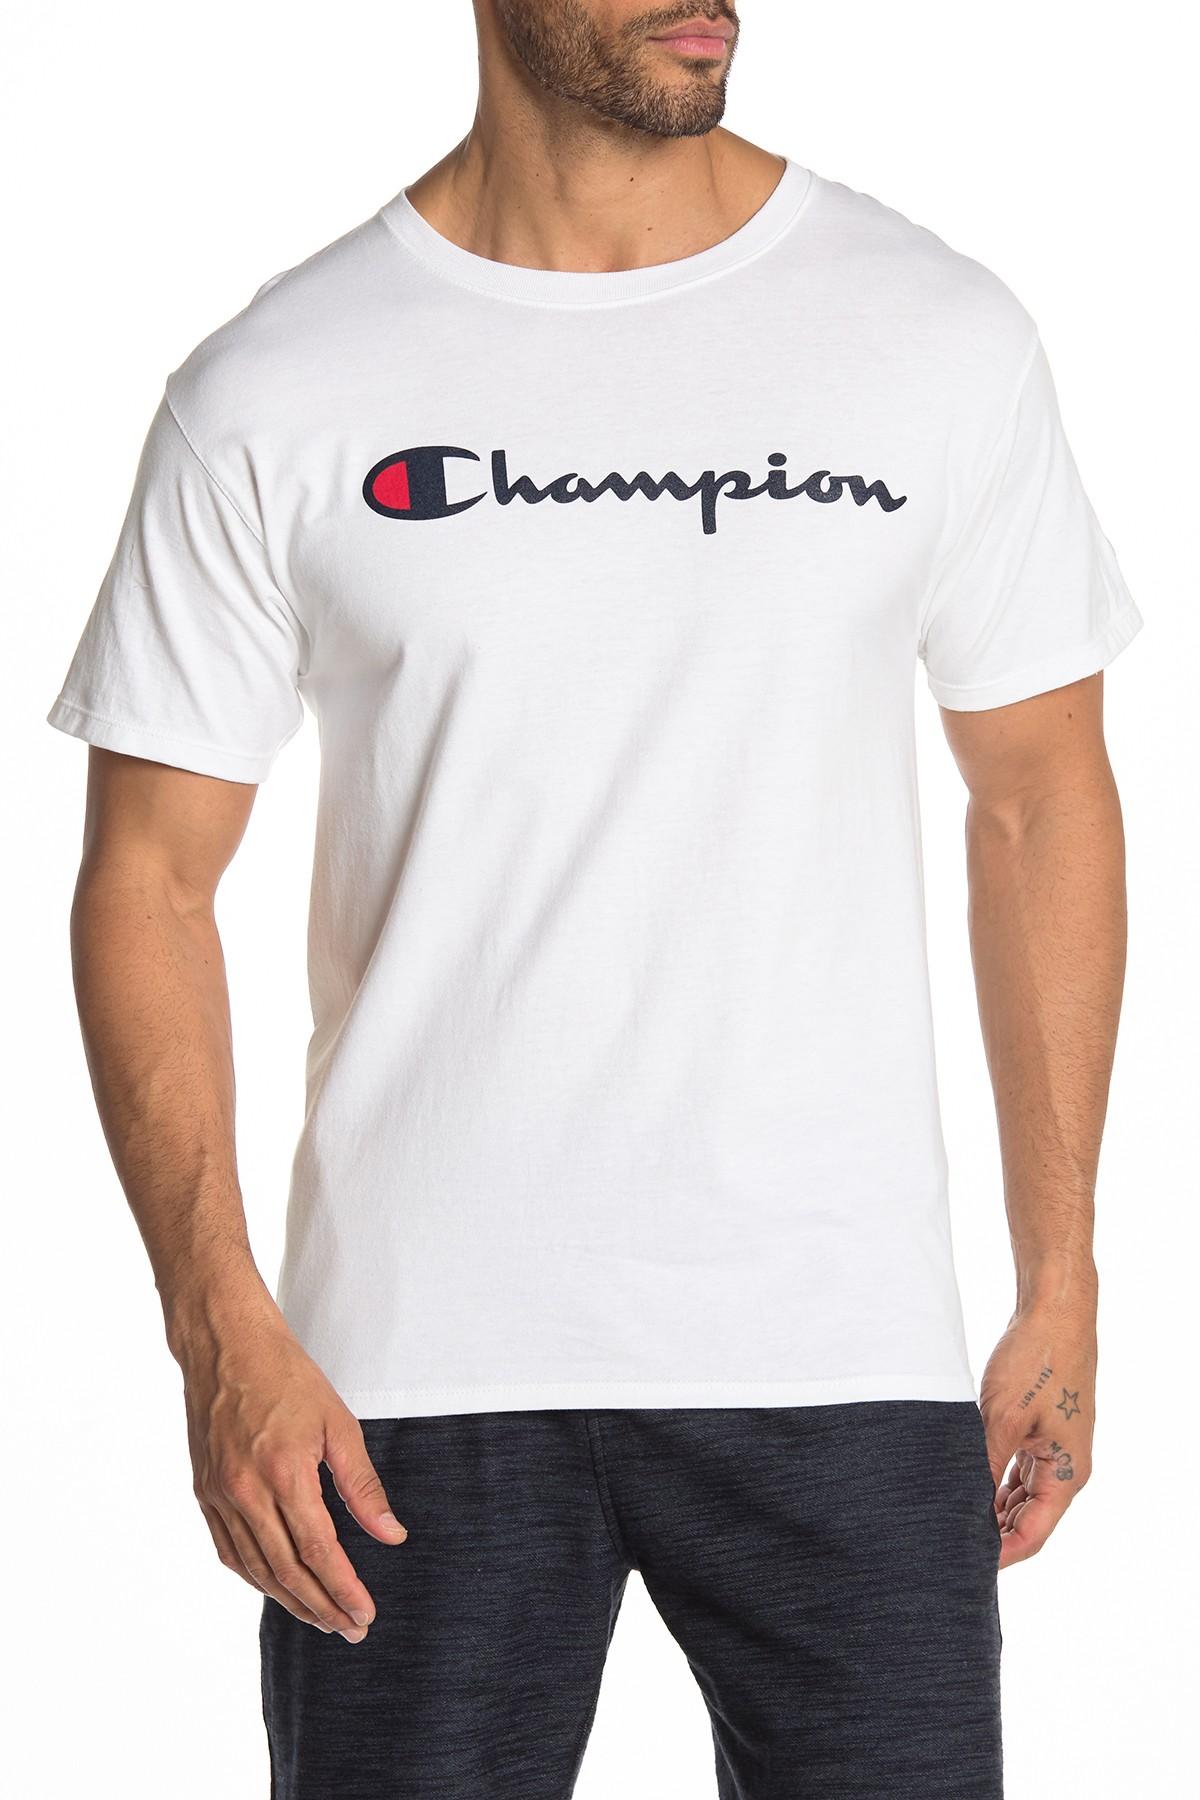 Champion Logo Print Crew Neck Tee in White for Men - Lyst